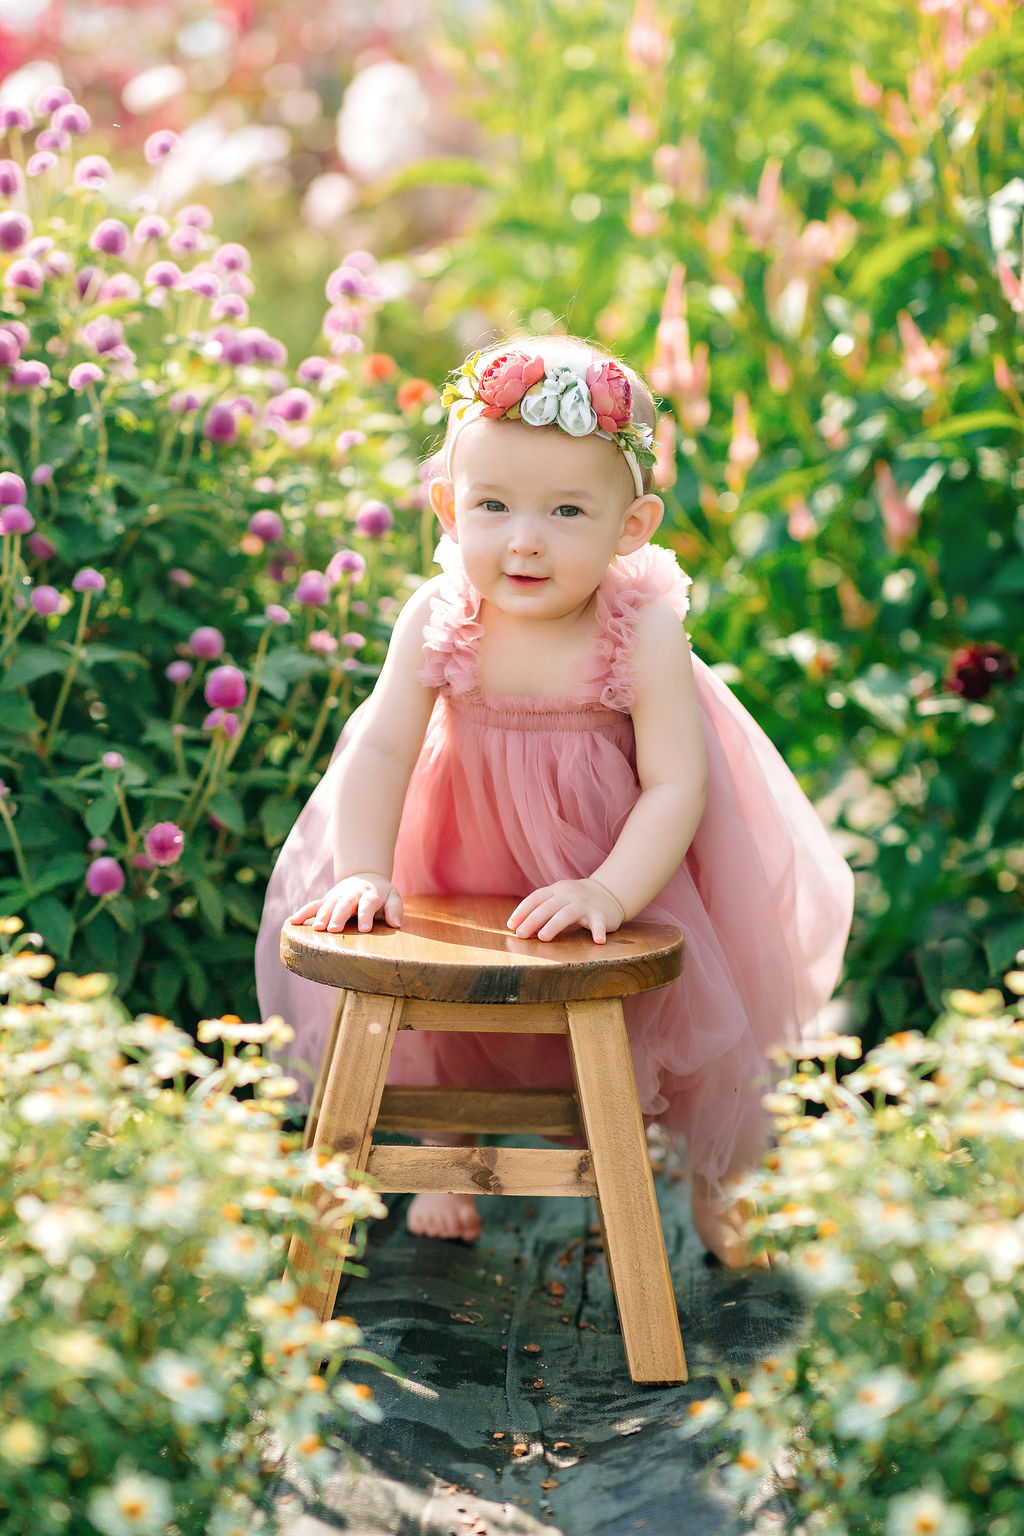 toddler stands with a wooden stool in a garden pufferbellies staunton va